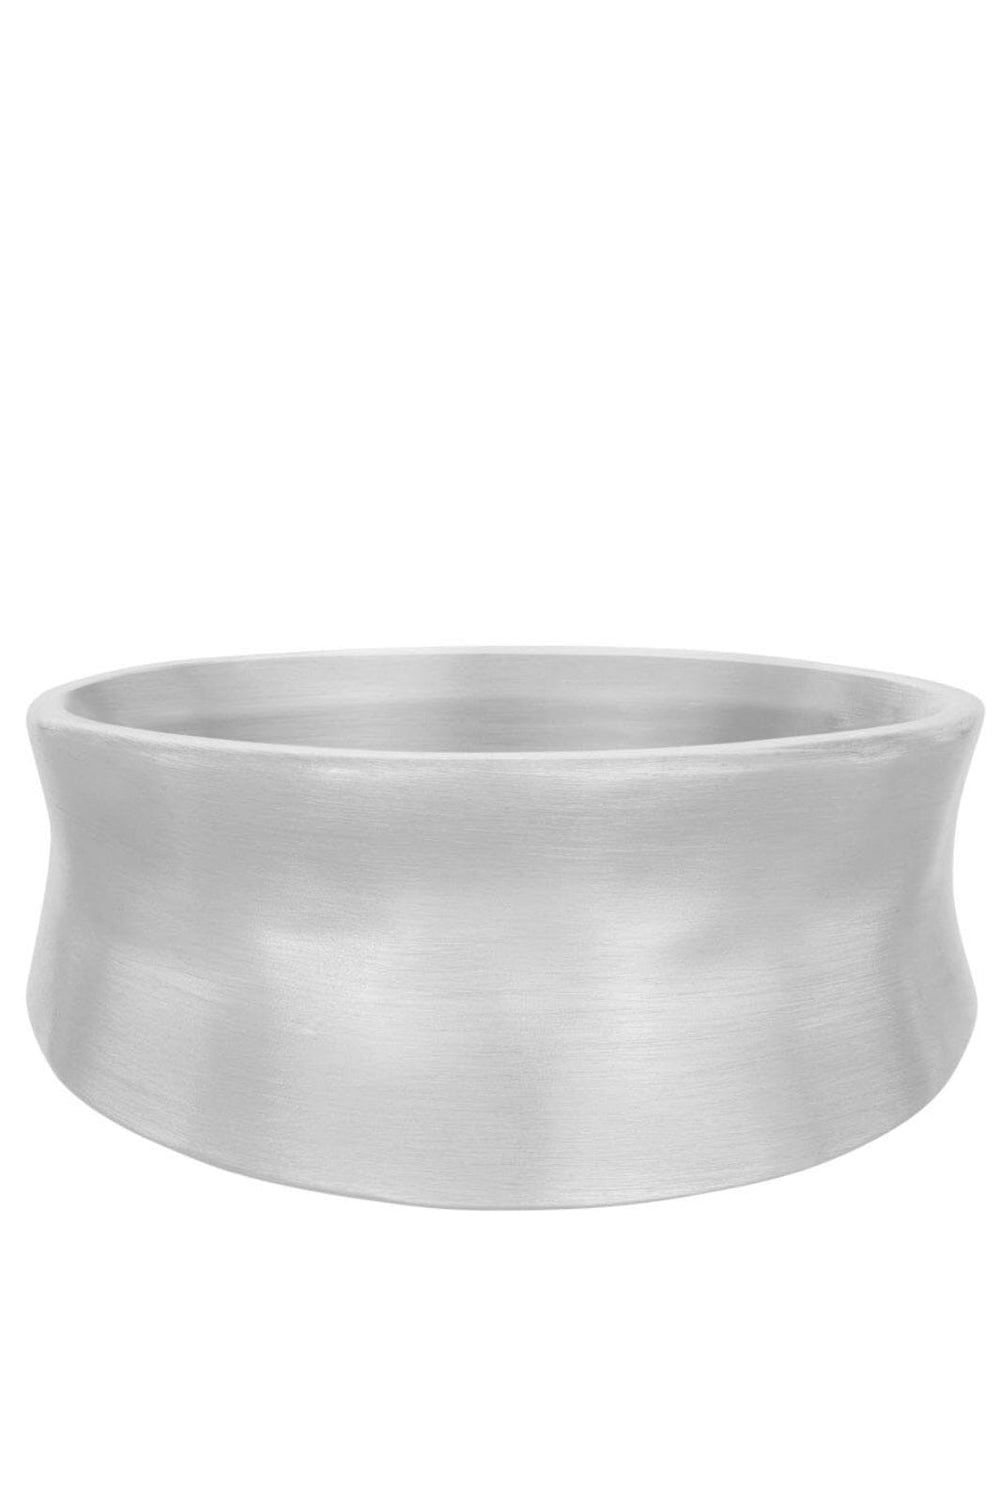 Pernille Corydon Jewellery - Saga Ring - Silver Ringe 